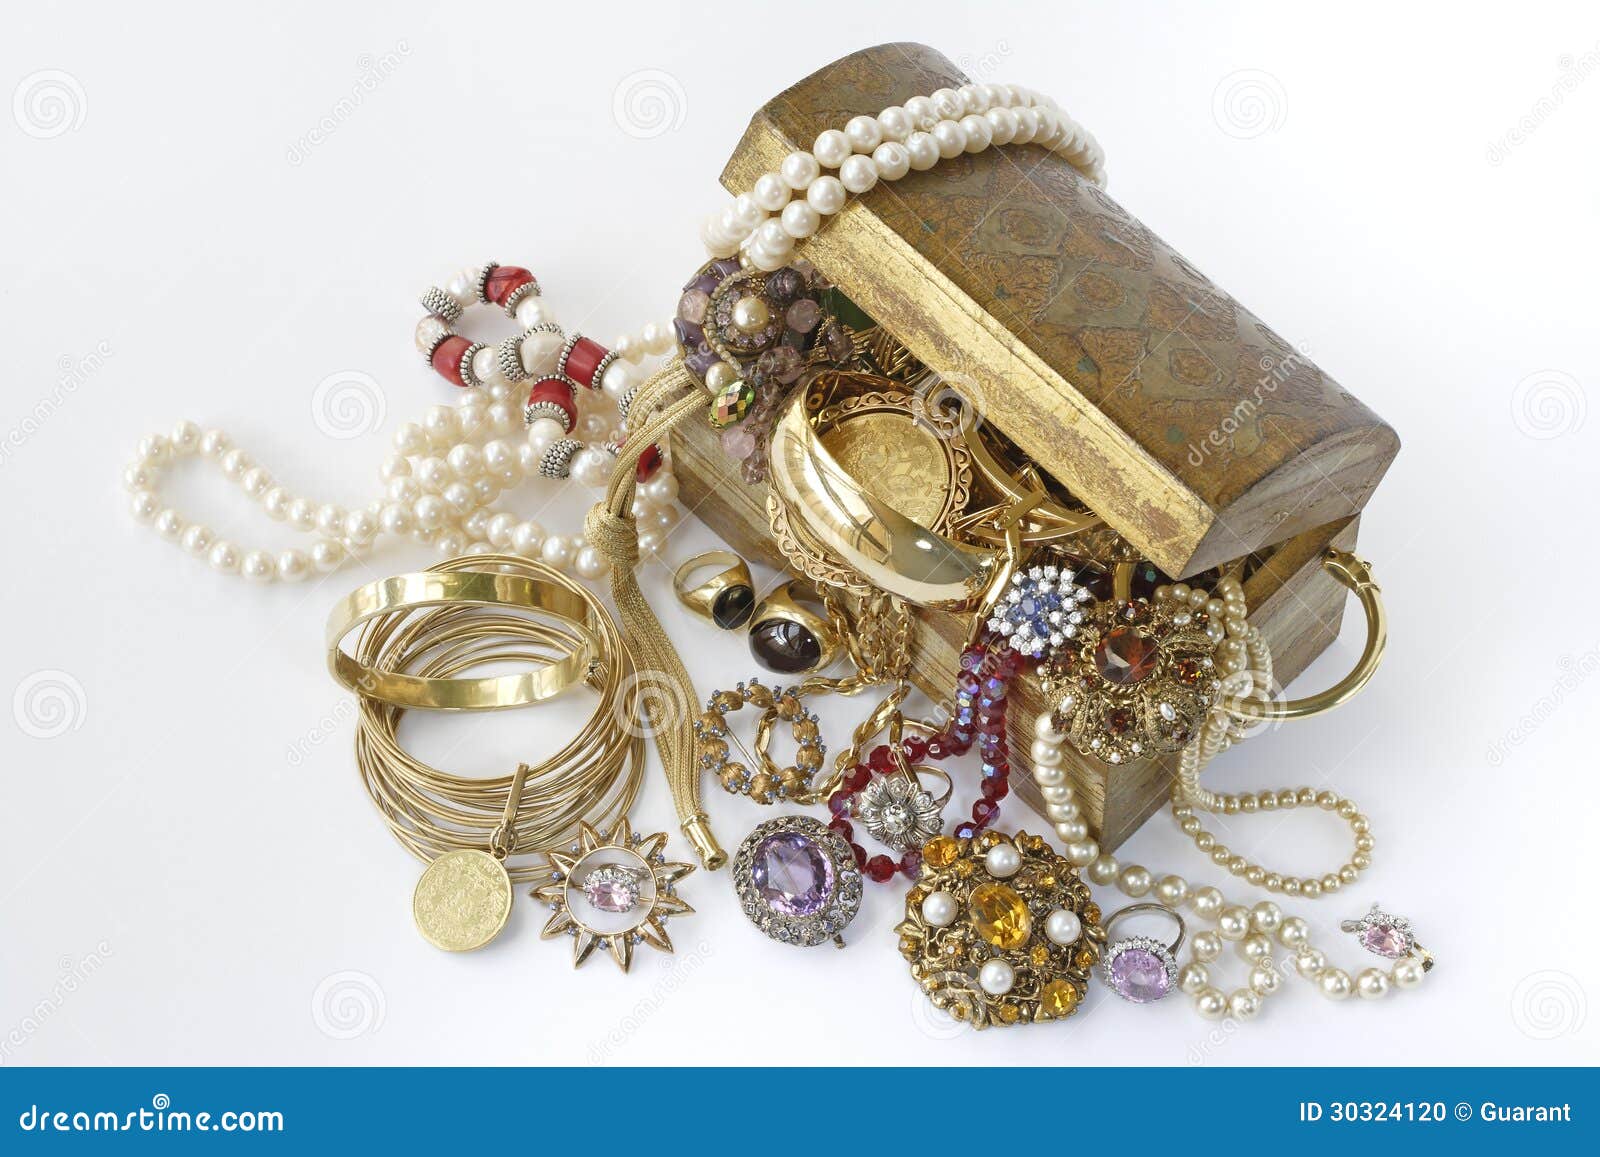 treasure chest with jewellery